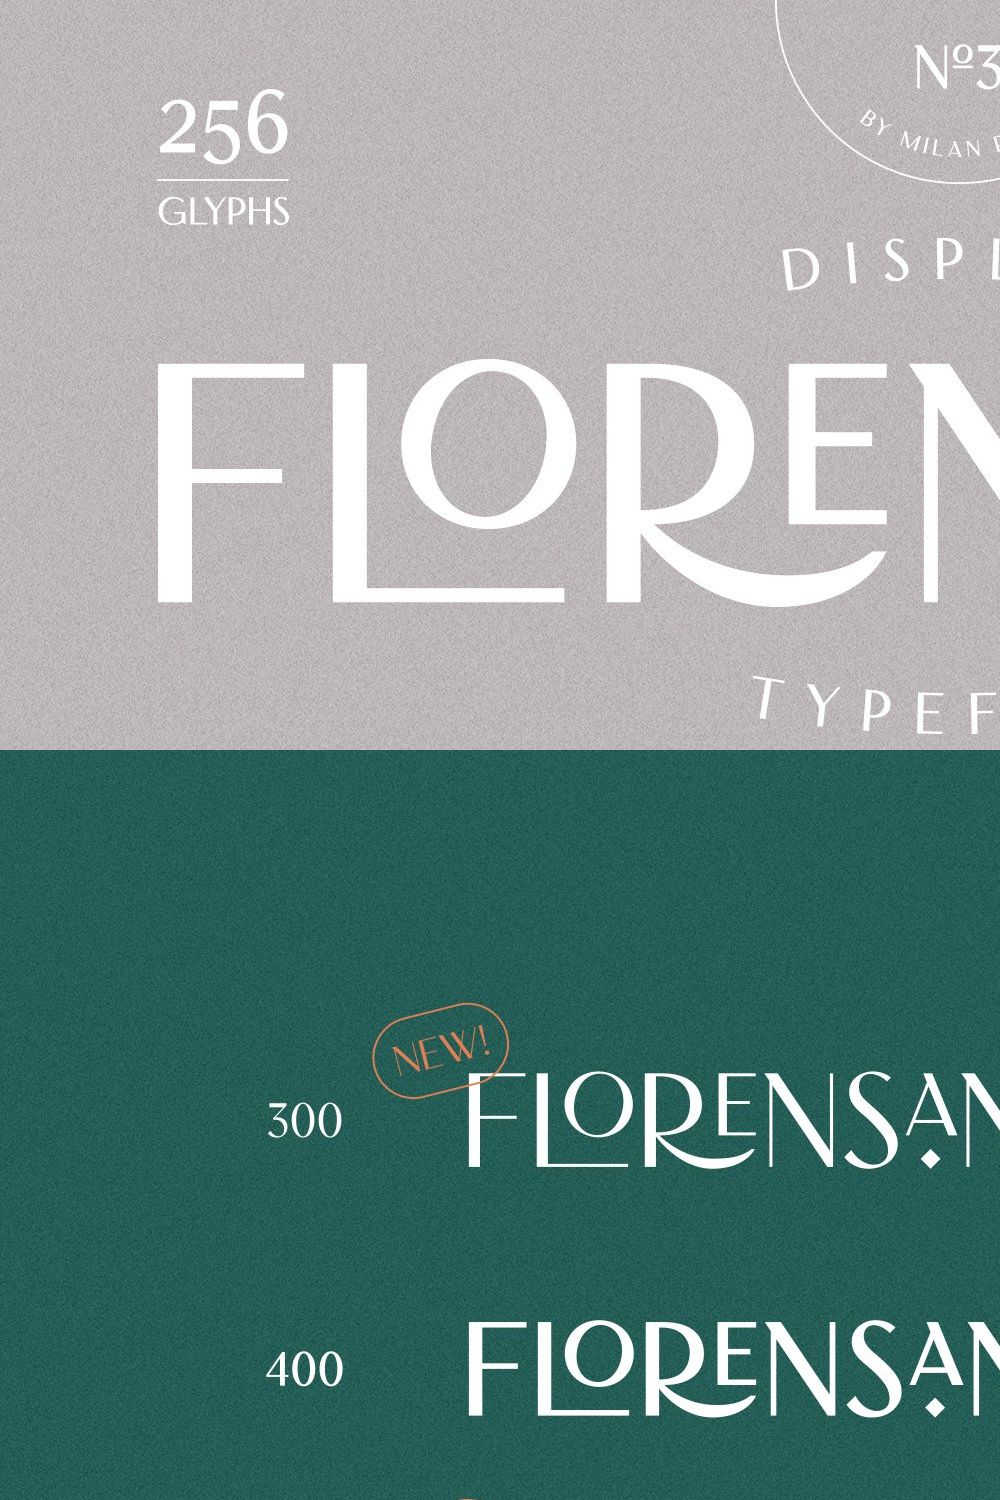 Florensans - Display Typeface pinterest preview image.